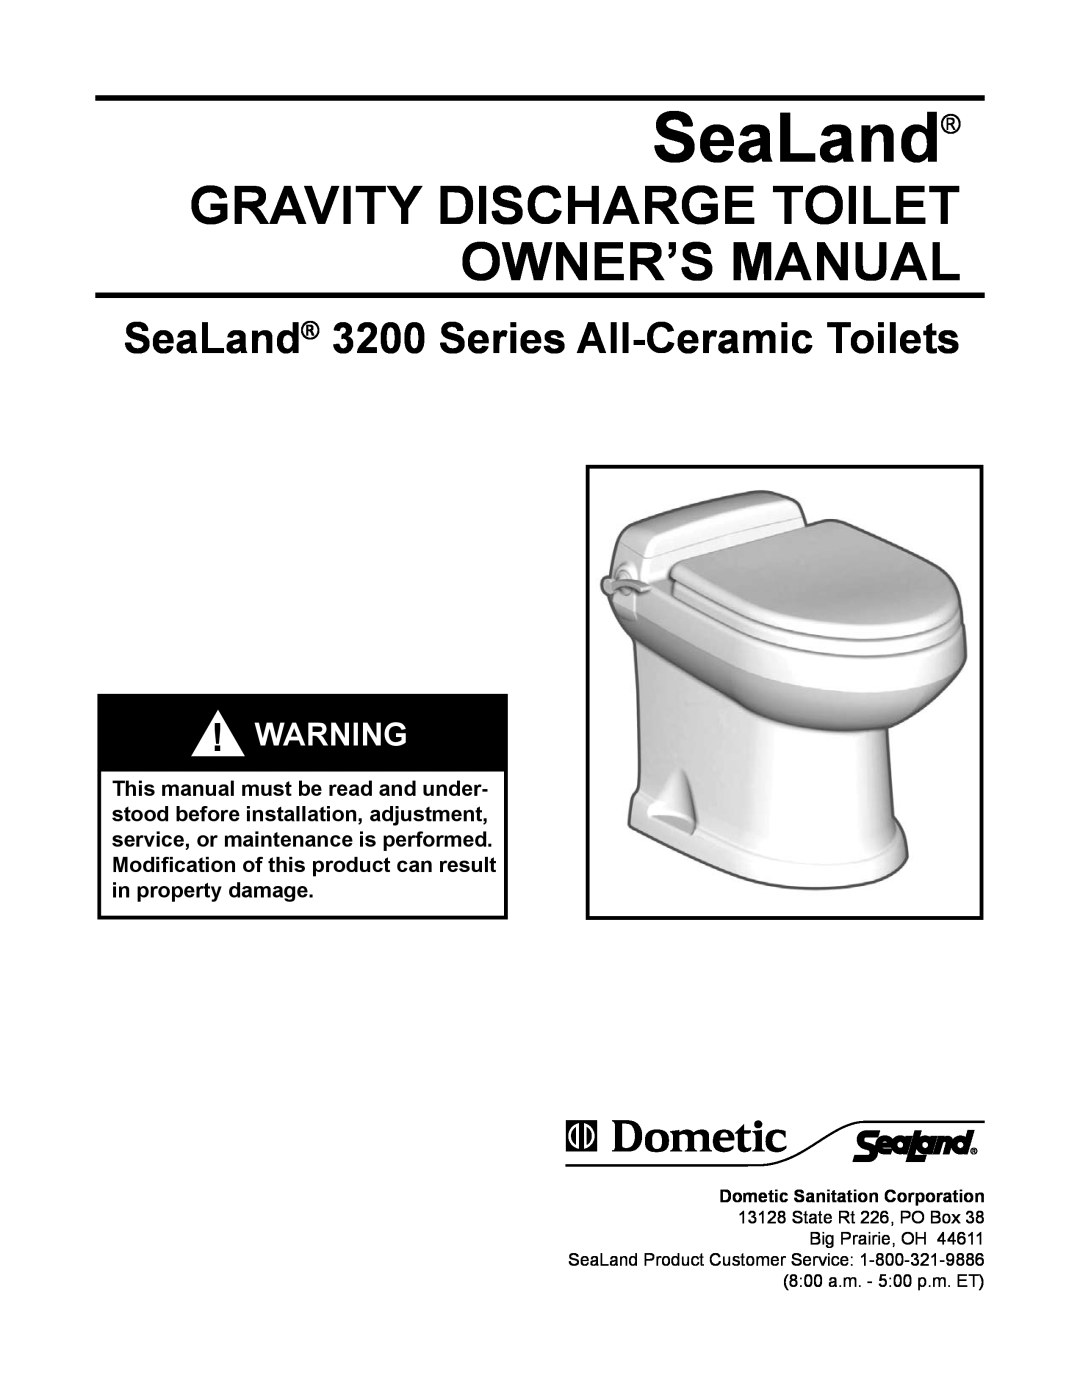 Dometic owner manual SeaLand 3200 Series All-CeramicToilets, Dometic Sanitation Corporation 